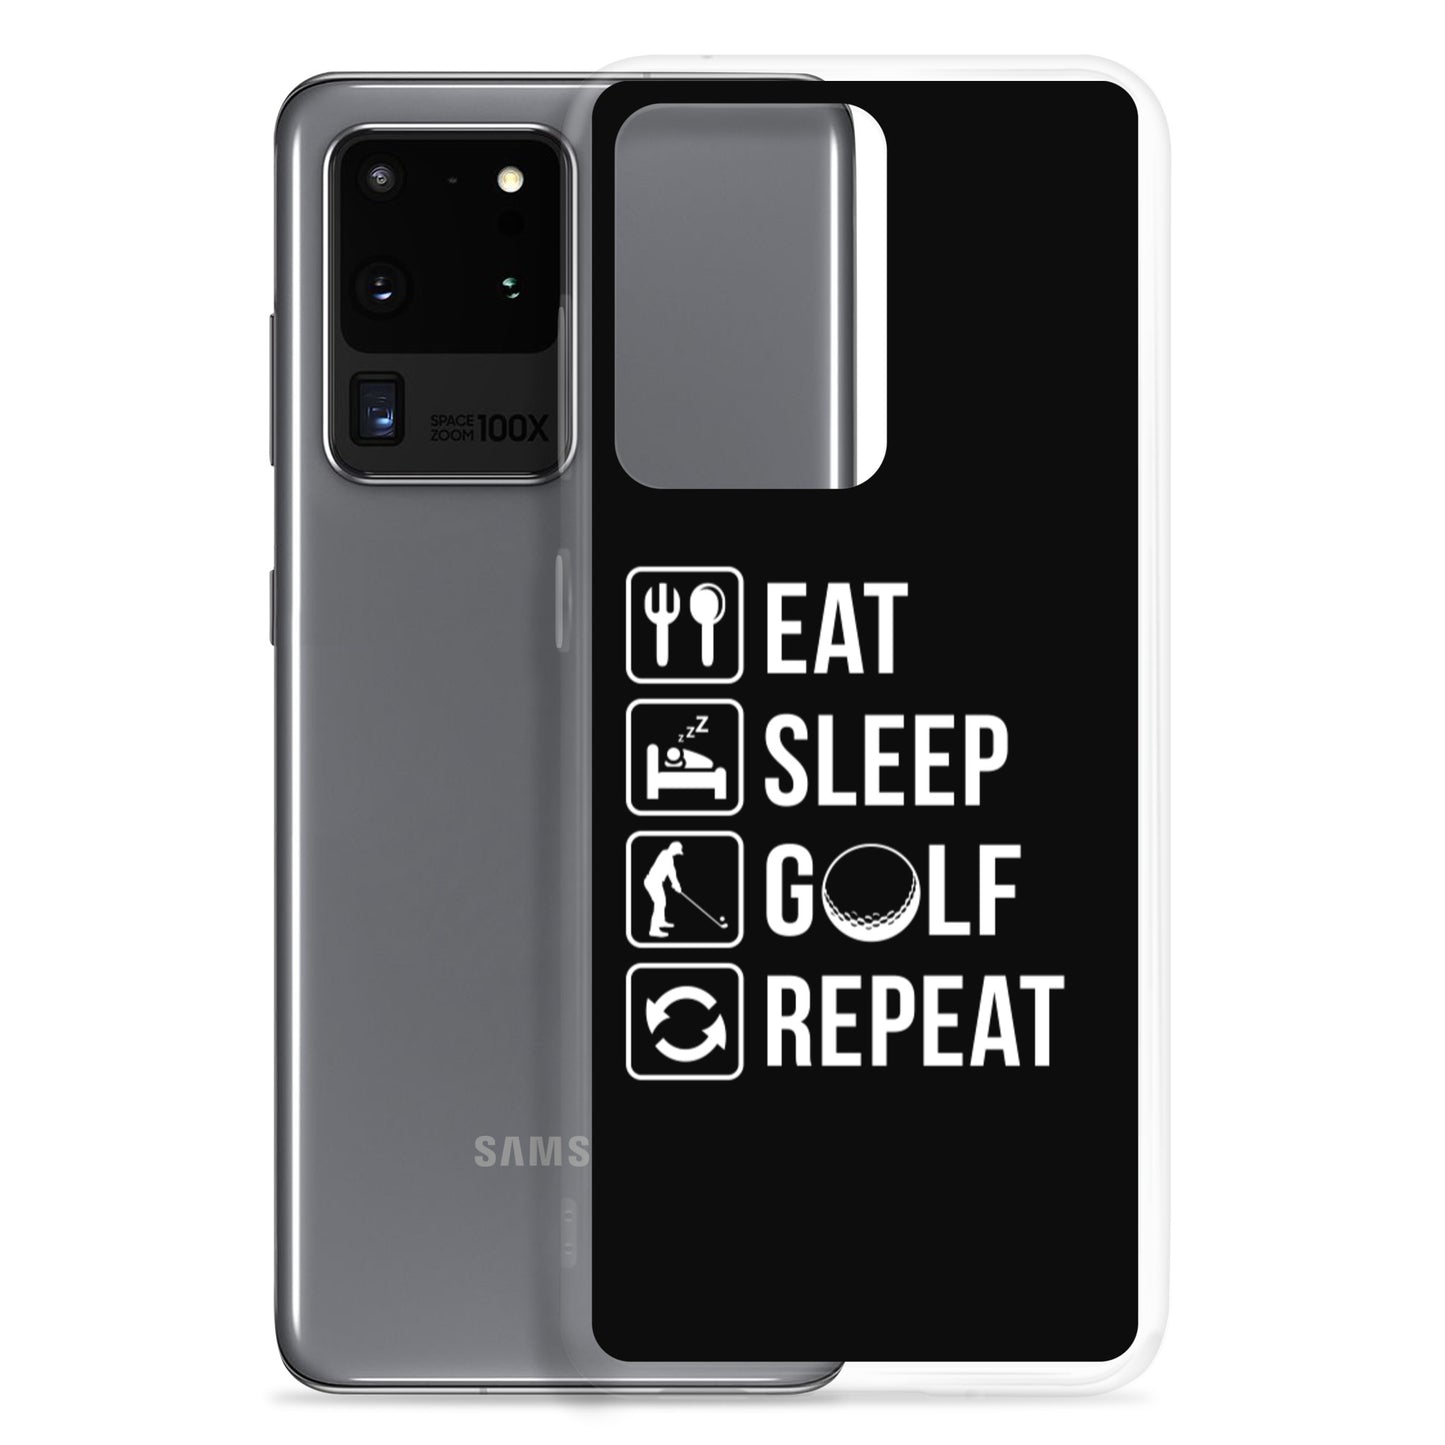 Eat, Sleep, Golf, Repeat Samsung Case